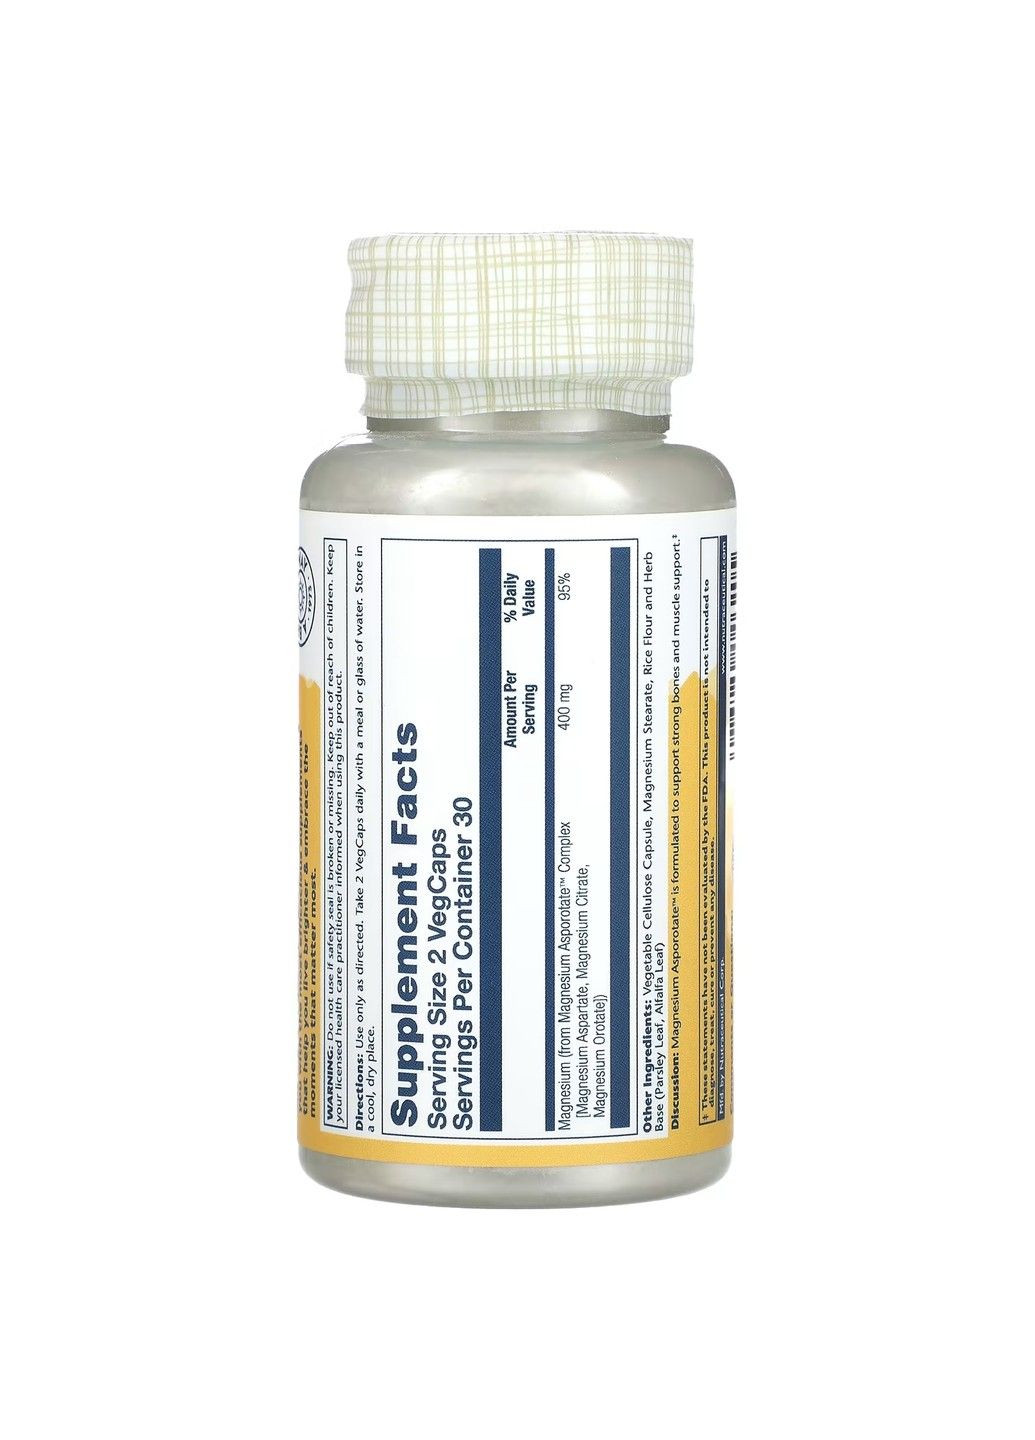 Аспартат Магнію Magnesium Asporotate 400 мг - 120 вег.капсул Solaray (293516633)